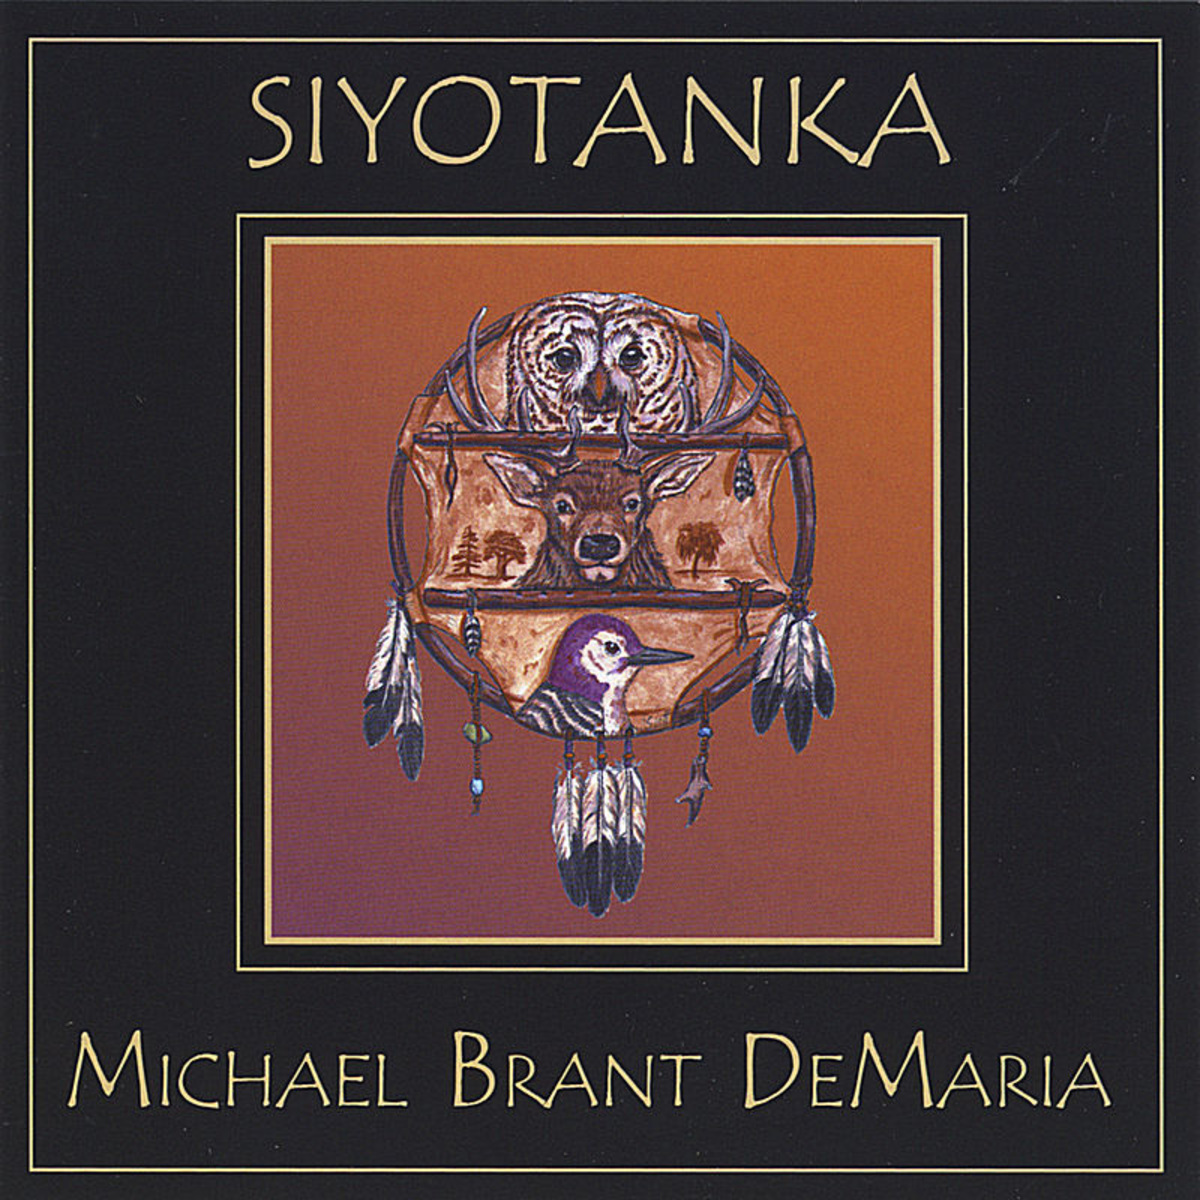 Cd Michael Brant DeMaria - Siyotanka Cover